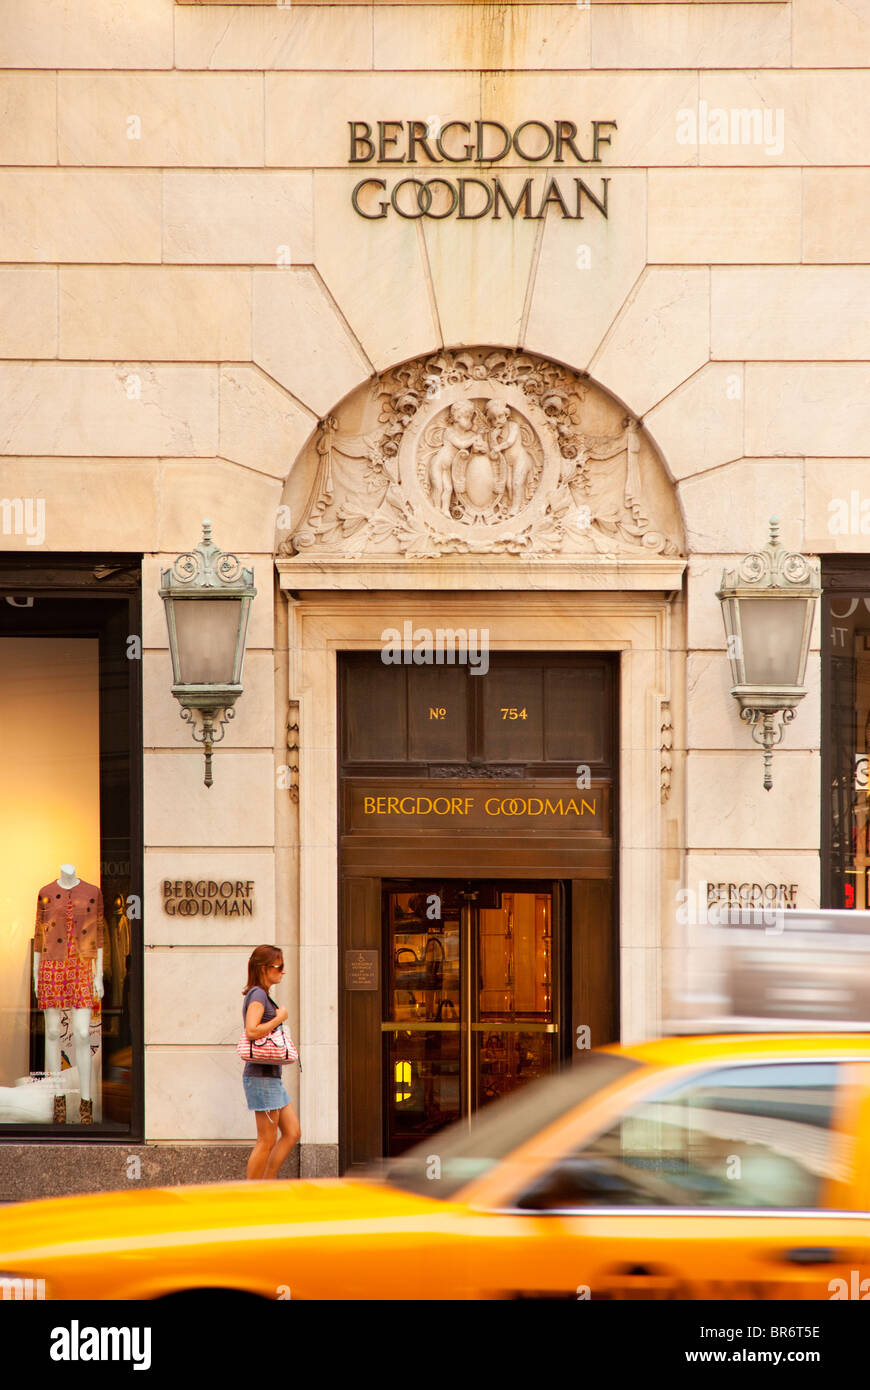 NYC's Bergdorf Goodman has opened a full floor devoted to pop art